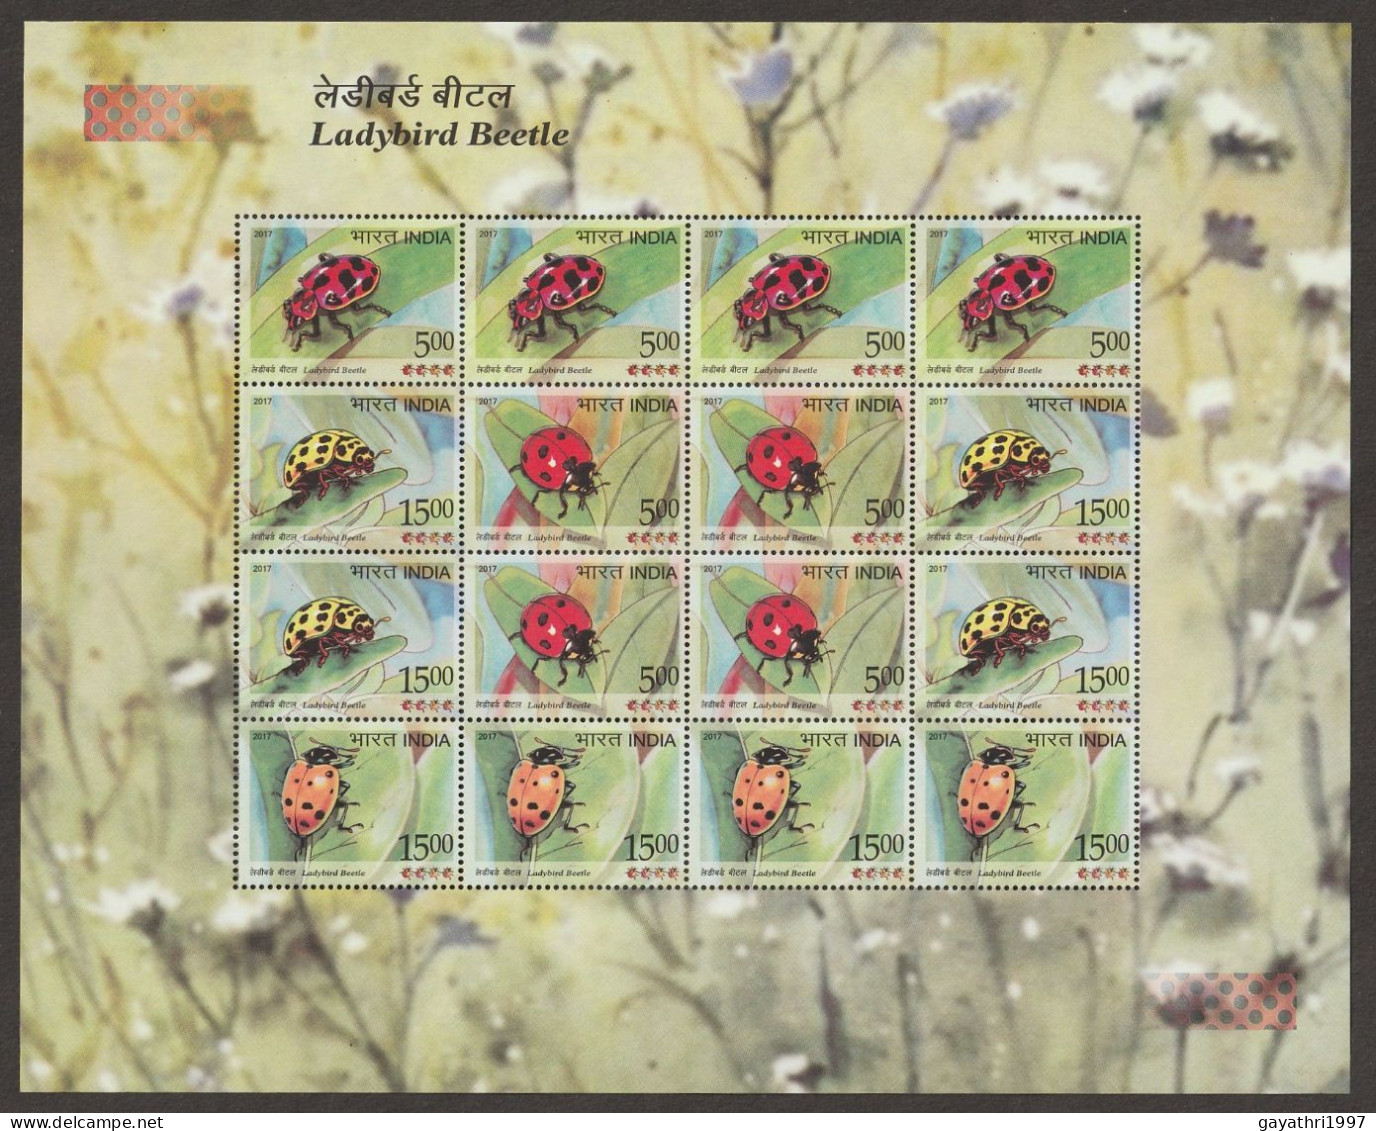 India 2017 Ladybird Beetles MINT SHEETLET Good Condition (SL-139) - Unused Stamps